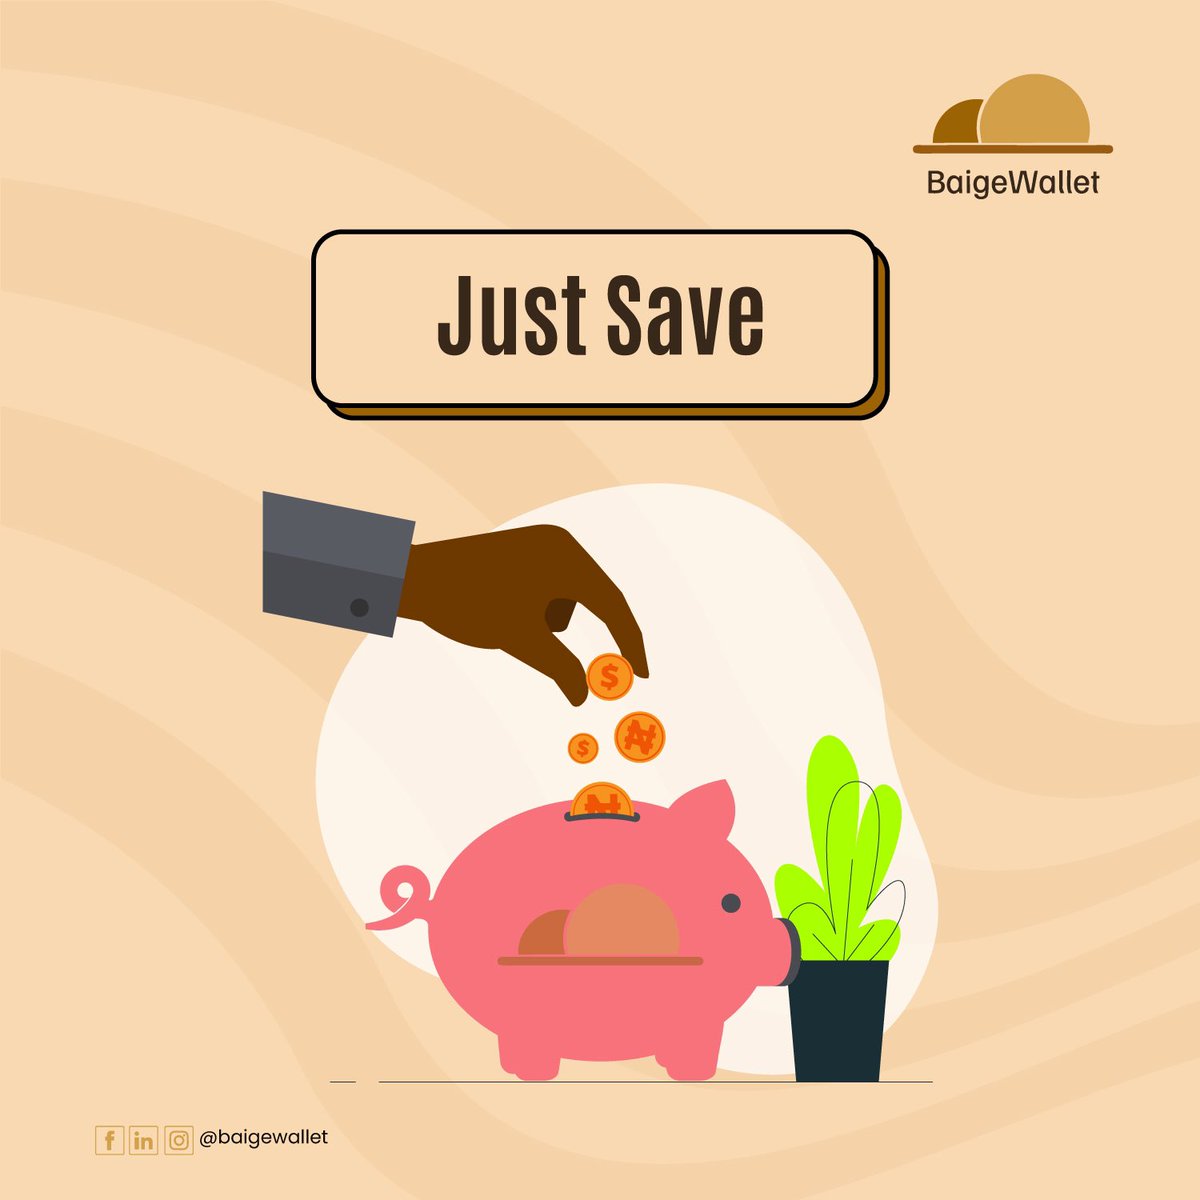 Kickstart your week on a Savings high! 
Financial freedom starts with every penny saved🤎

#Baigewallet #Mondaymotivation #investment #savings #savingtips #savingmoney